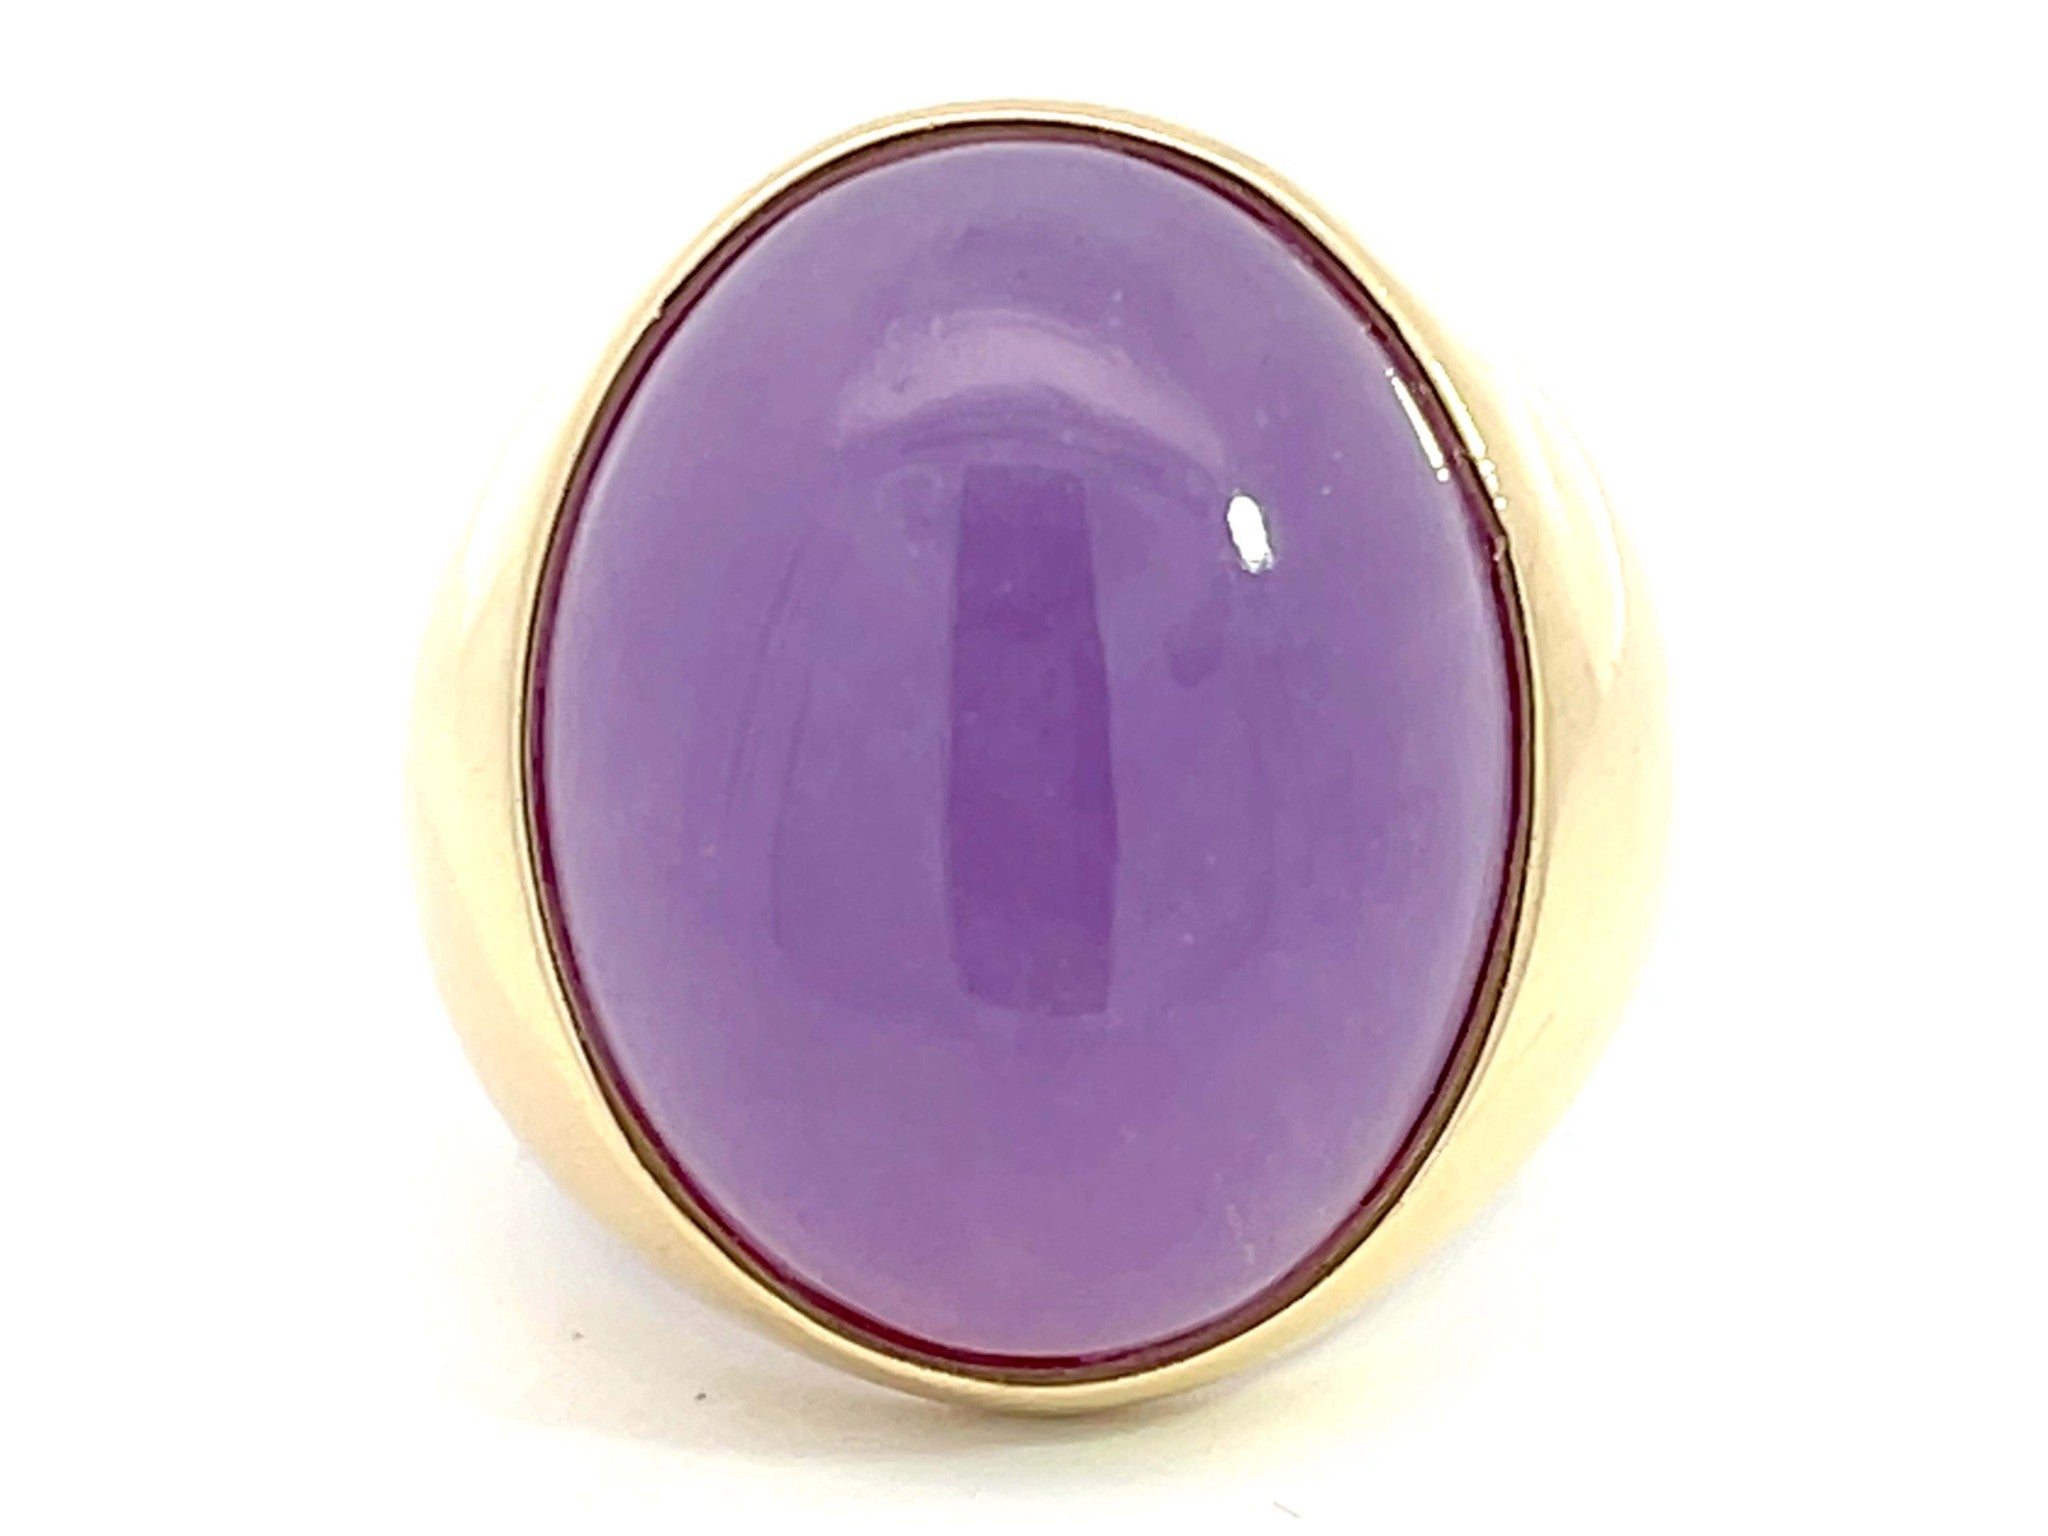 Large Mens Purple 37 Carat Jade Cabochon Ring in 14k Yellow Gold